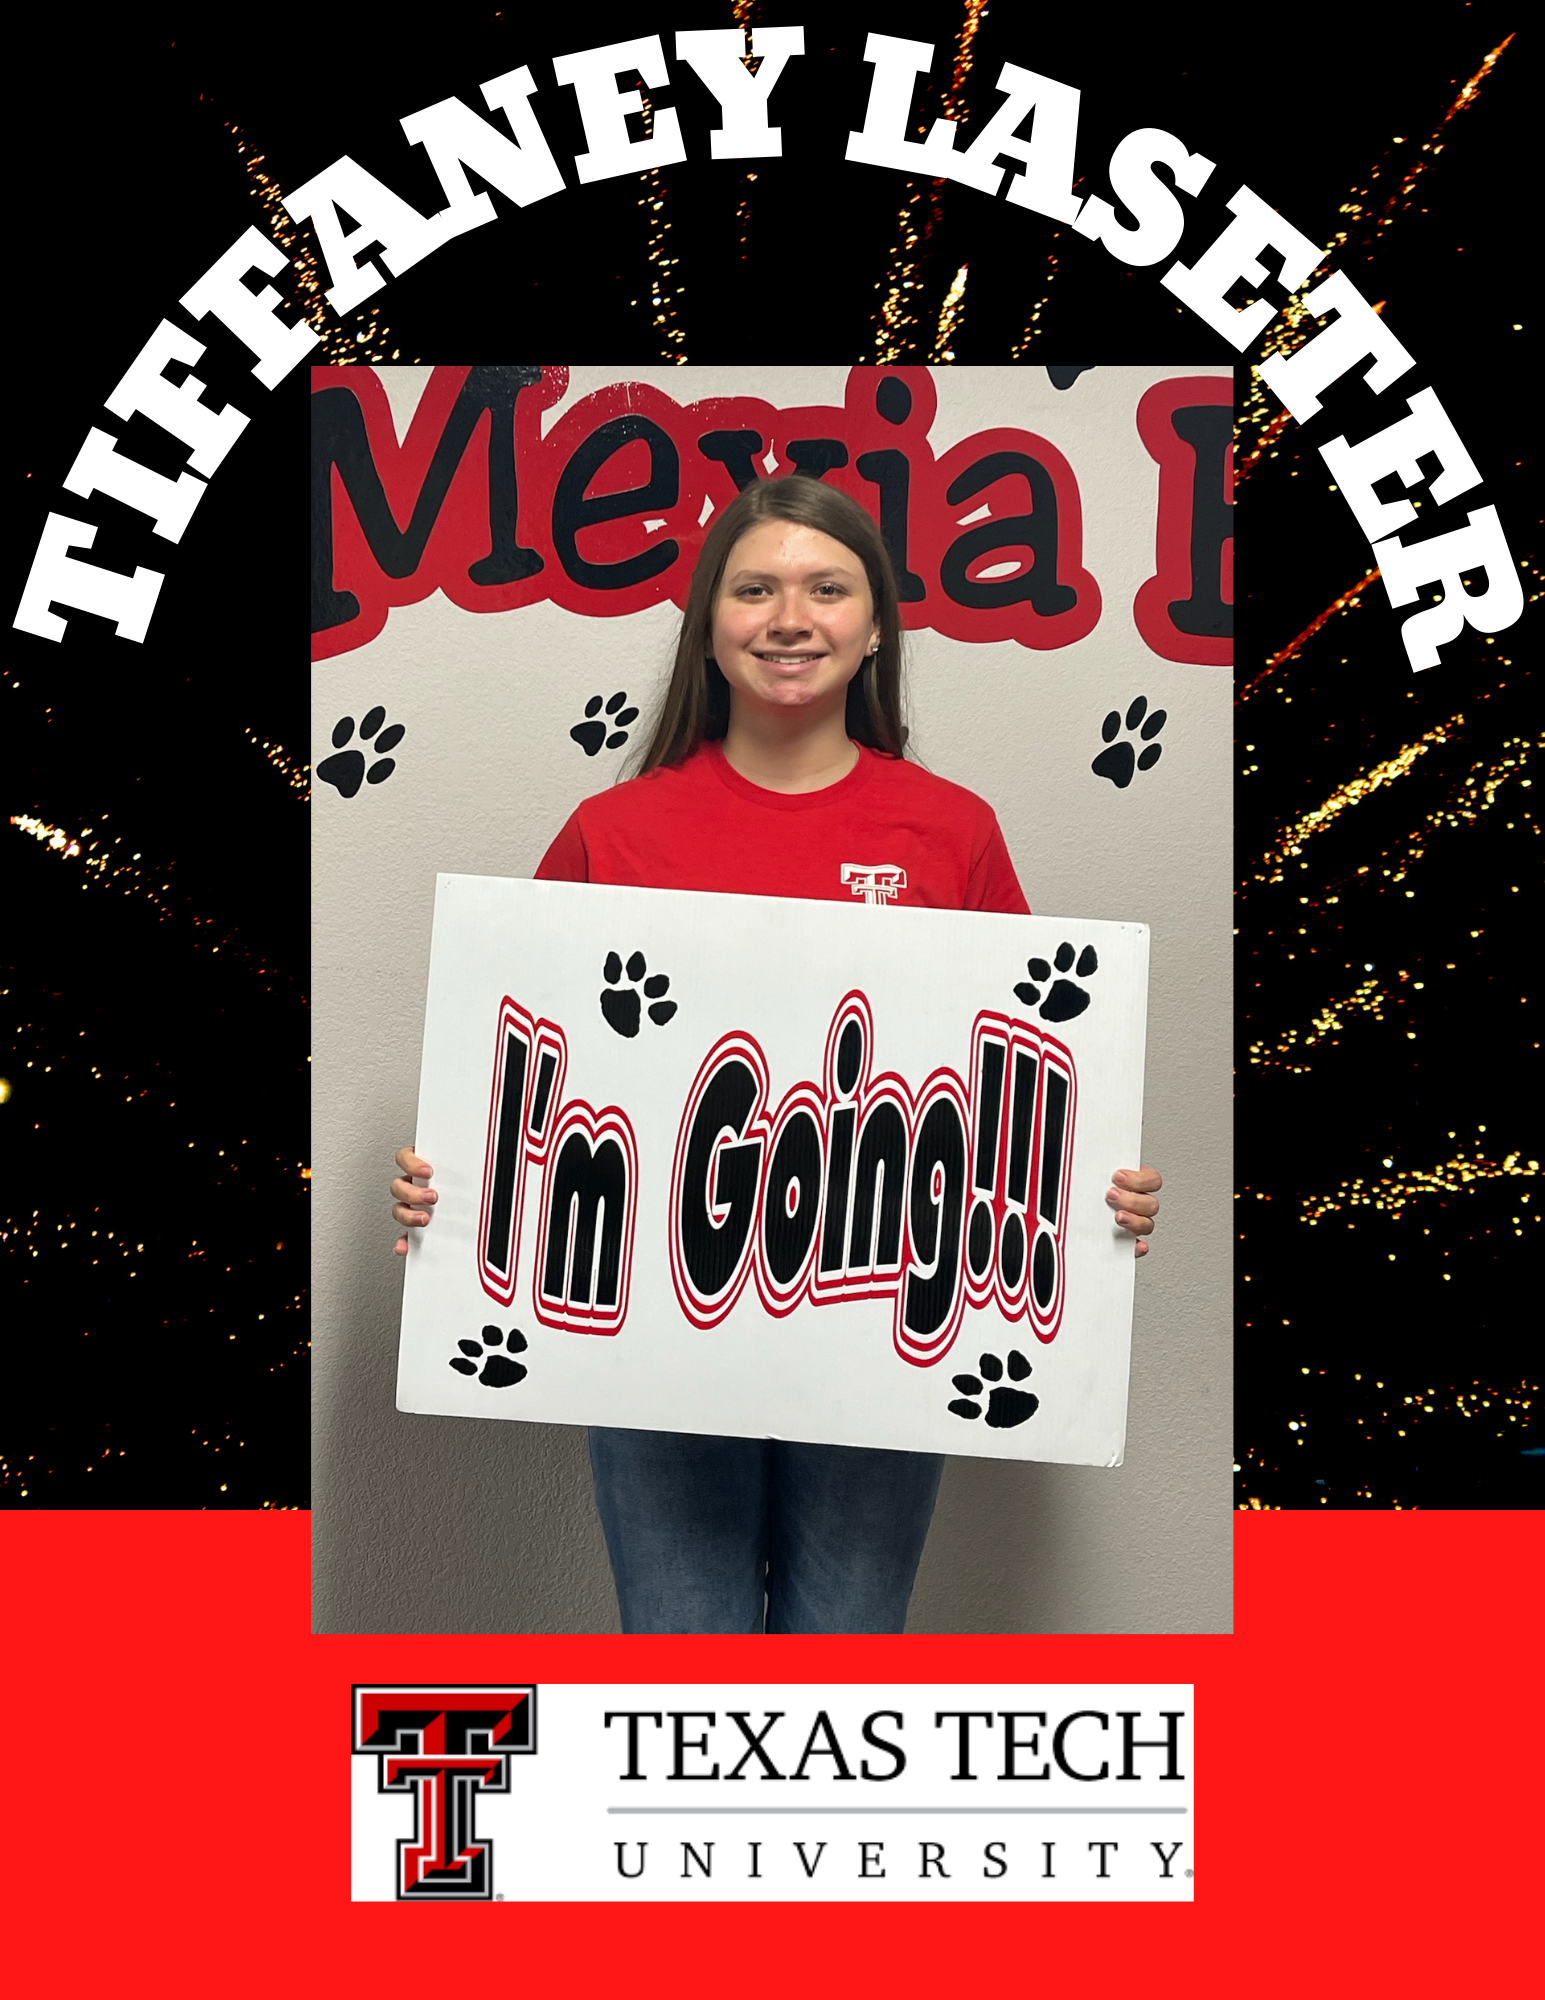 Tiffany Laseter - I'm Going! - Texas Tech University